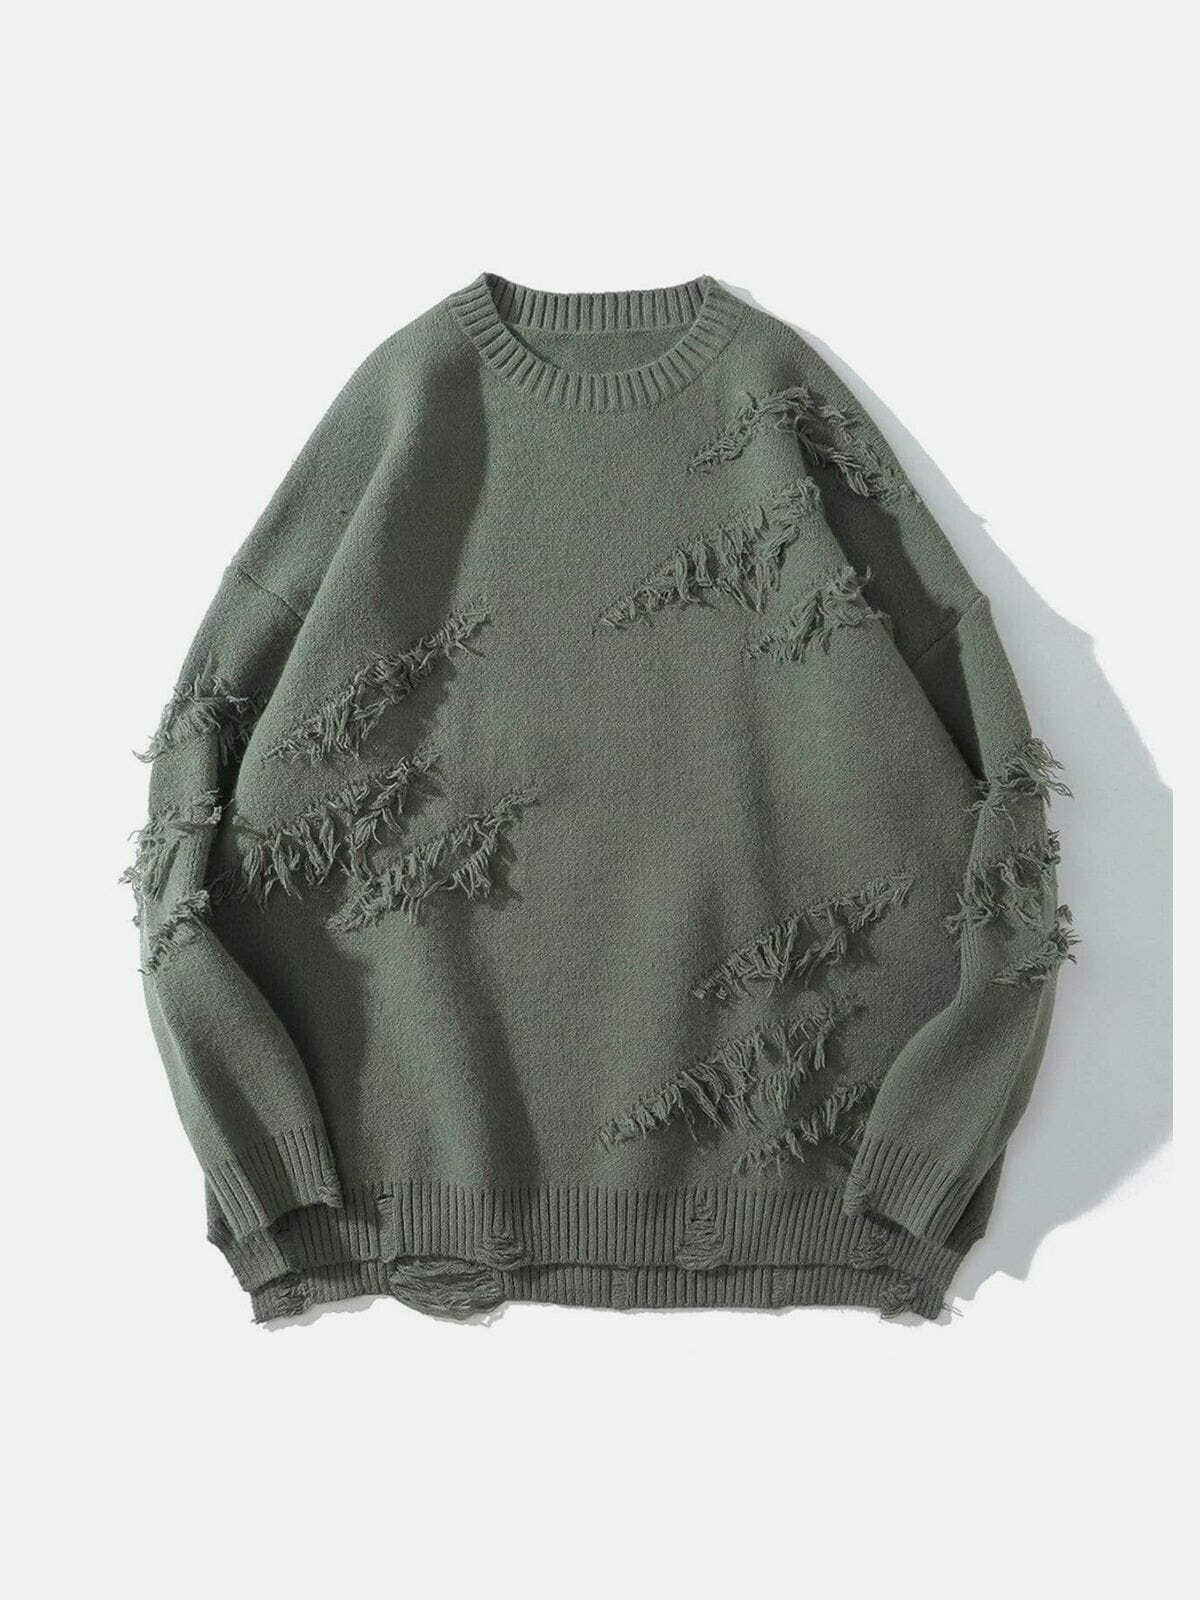 fringed knit sweater edgy y2k fashion essential 5823